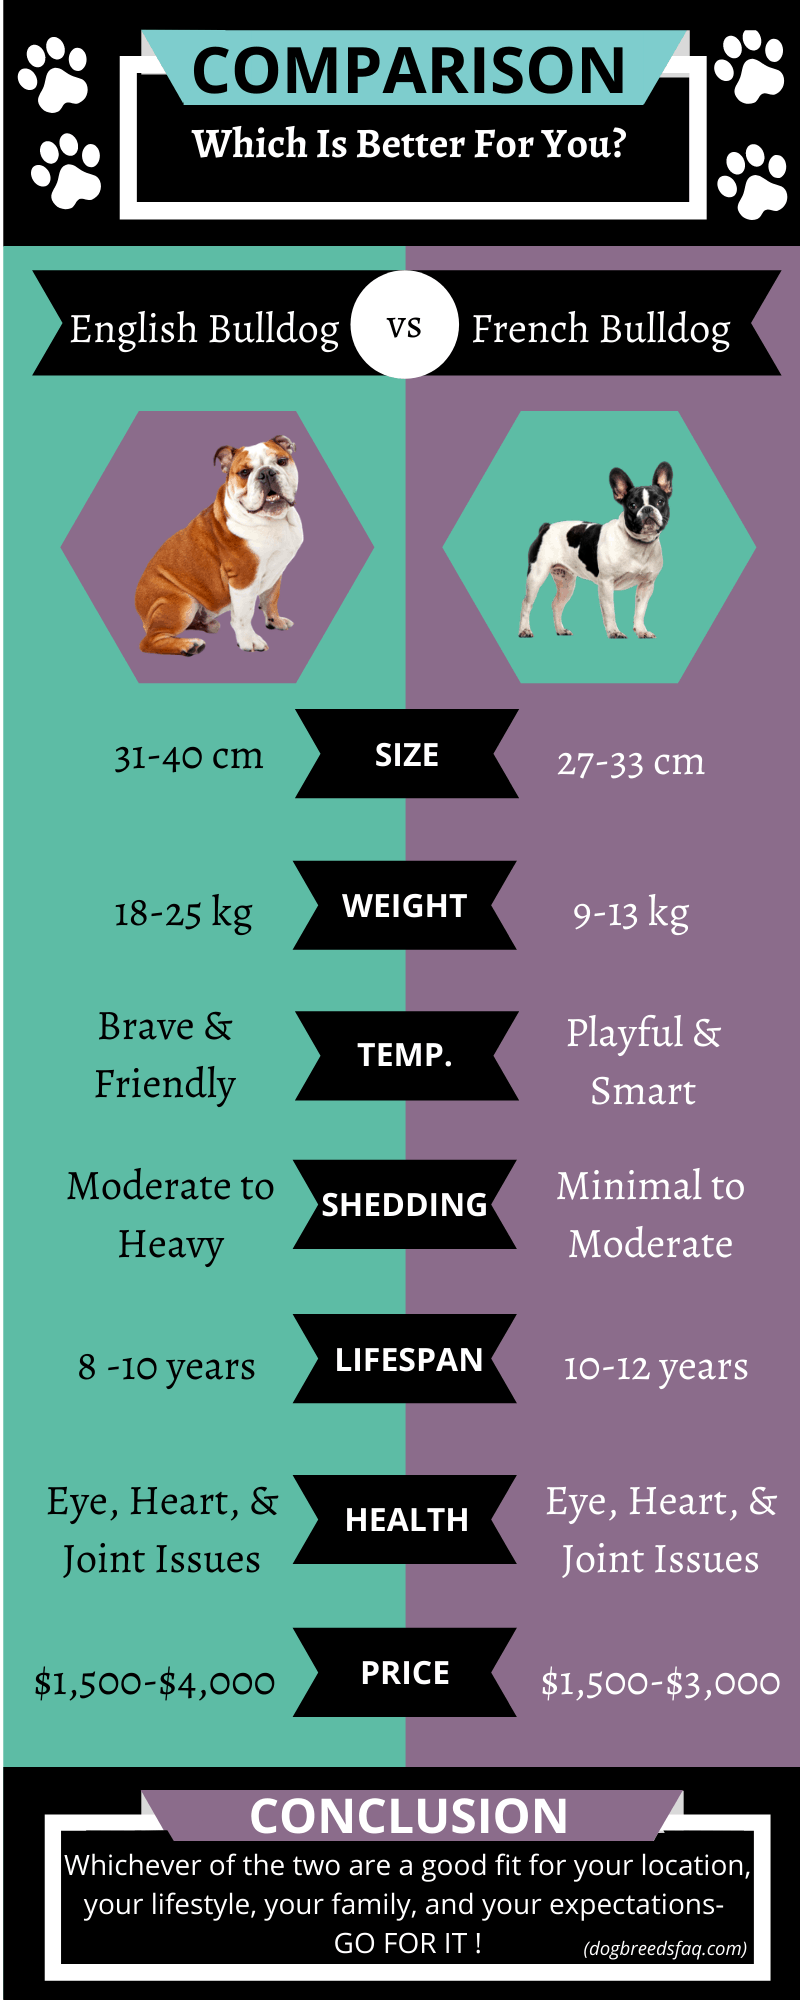 English Bulldog vs French Bulldog Comparison Infographic